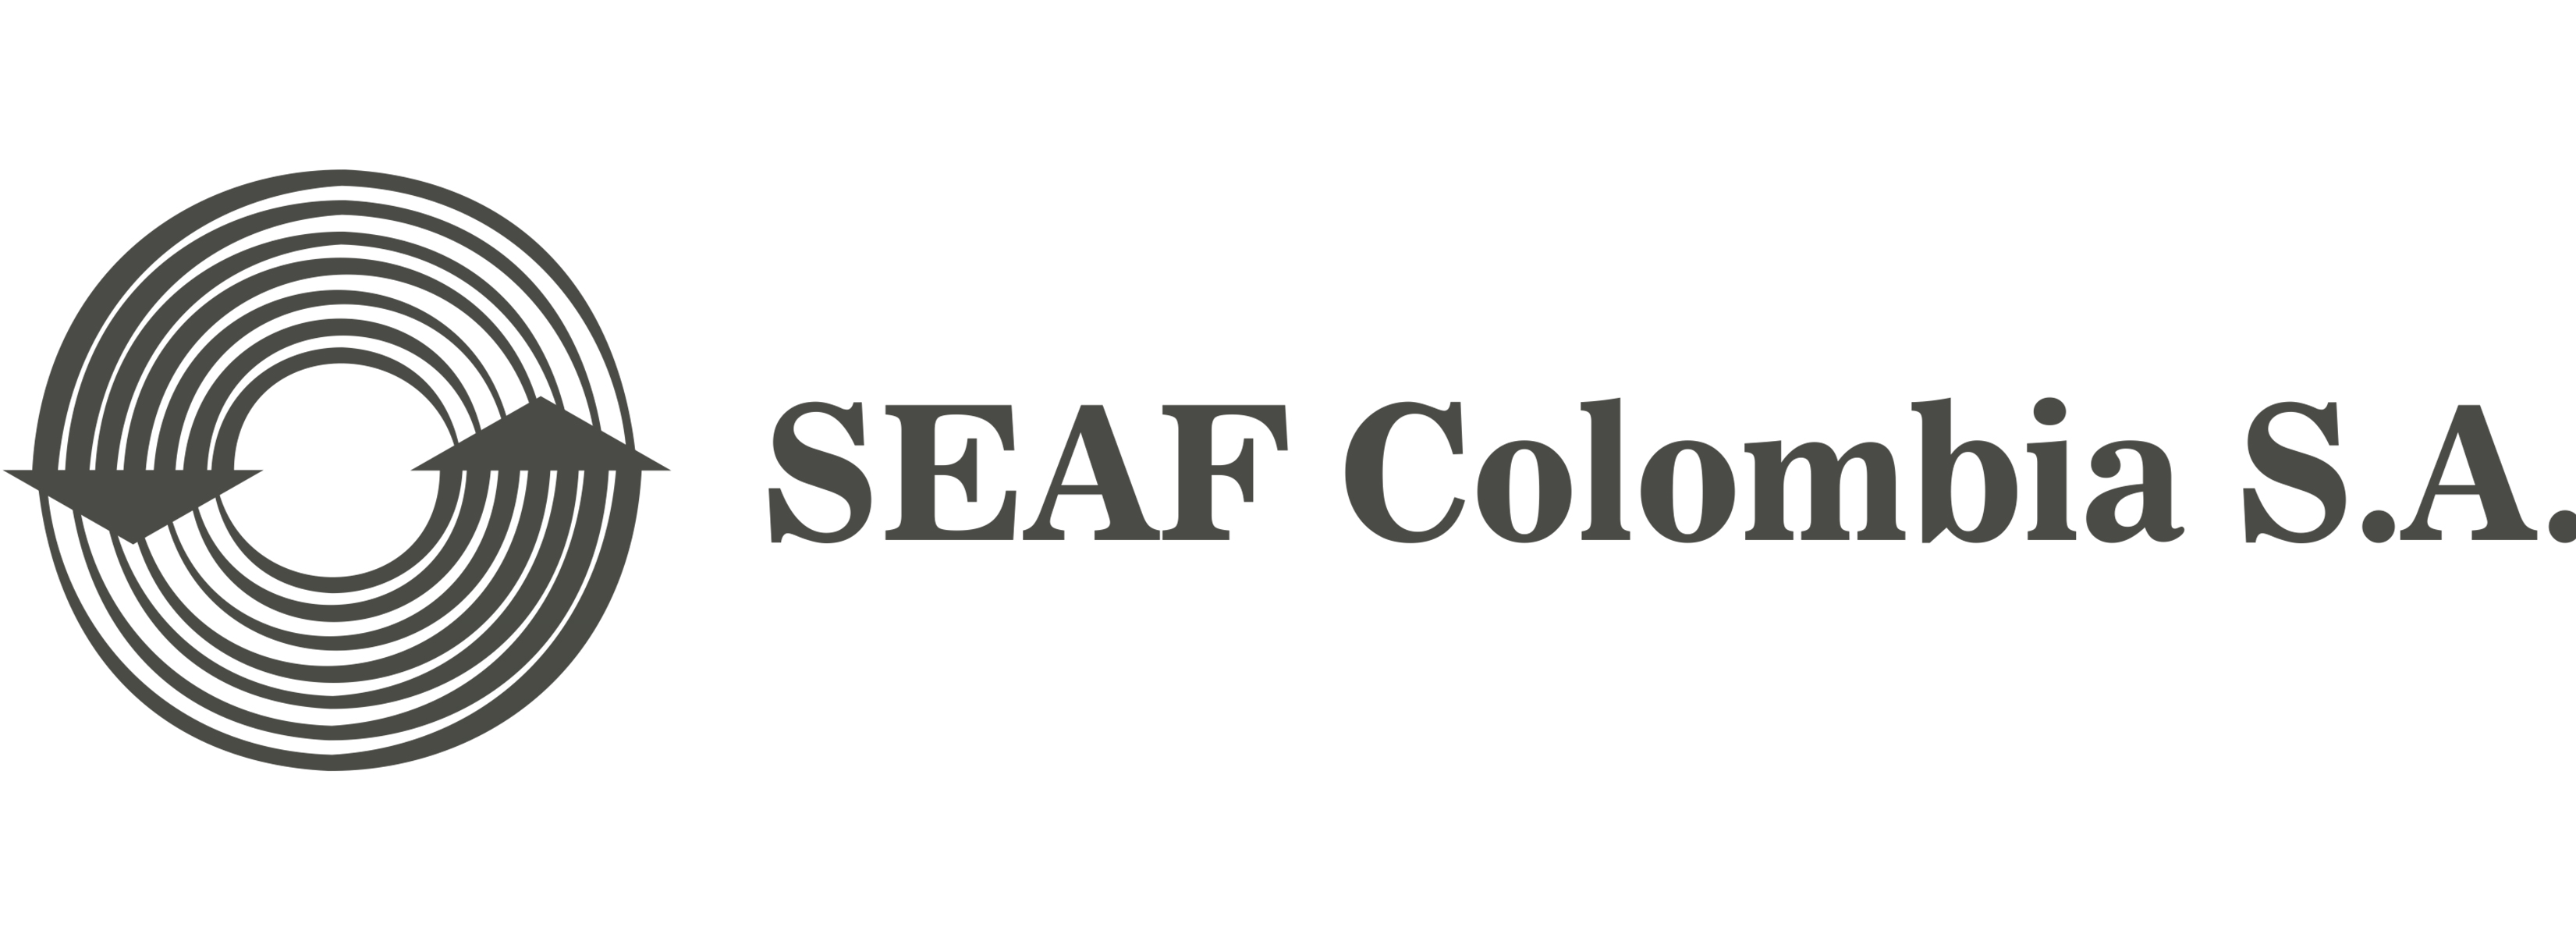 Icono SEAF Colombia S.A.